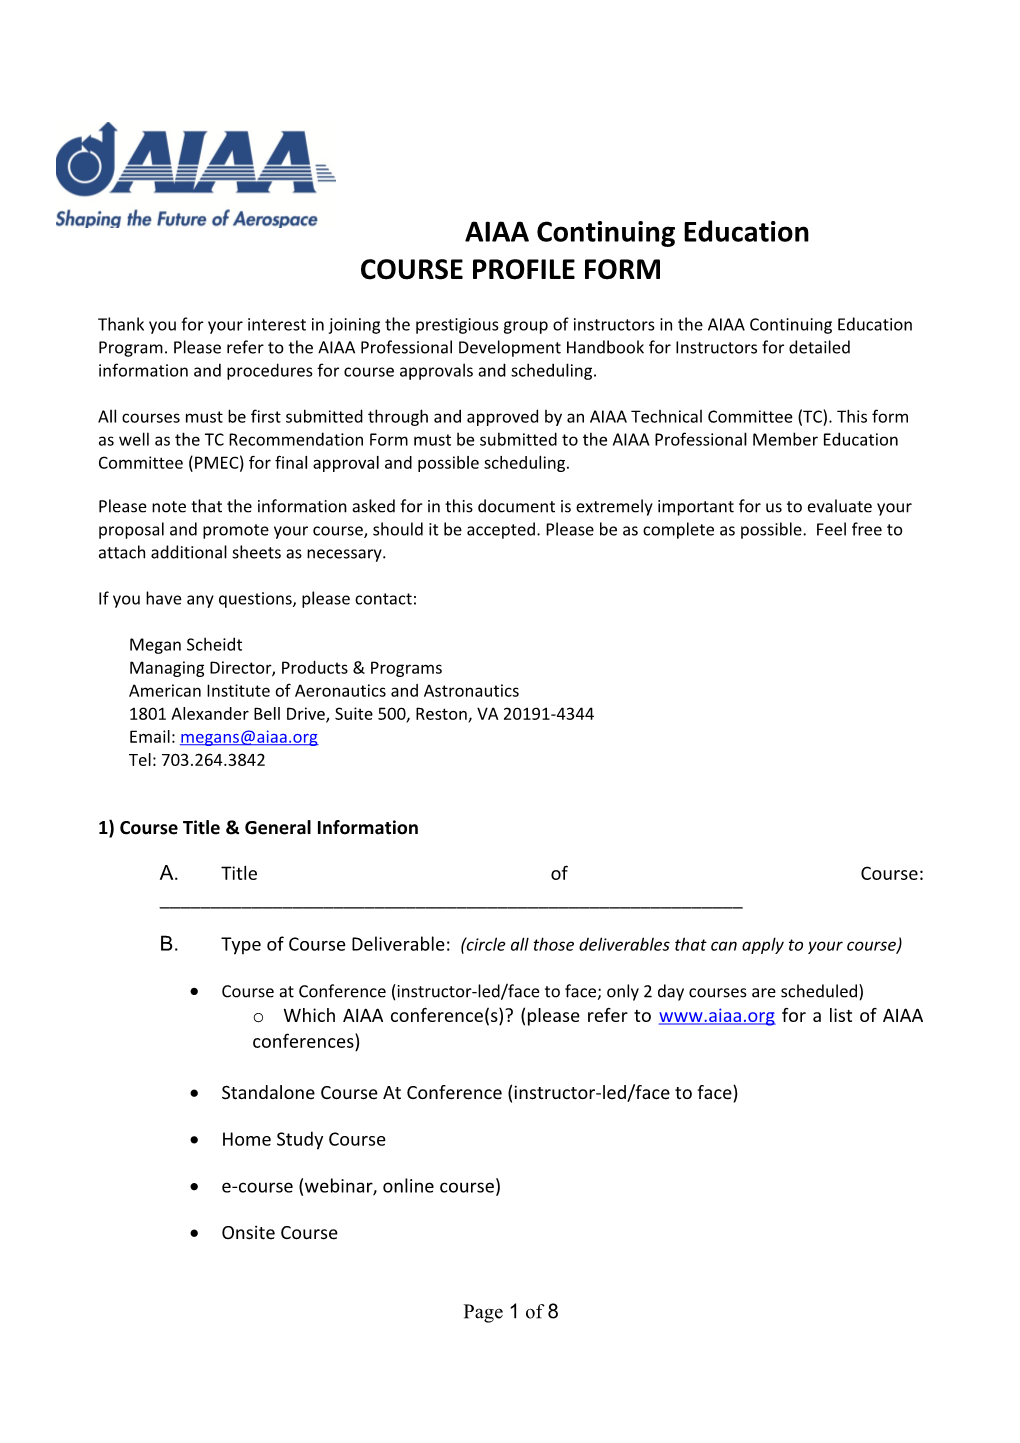 AIAA CE Course Profile